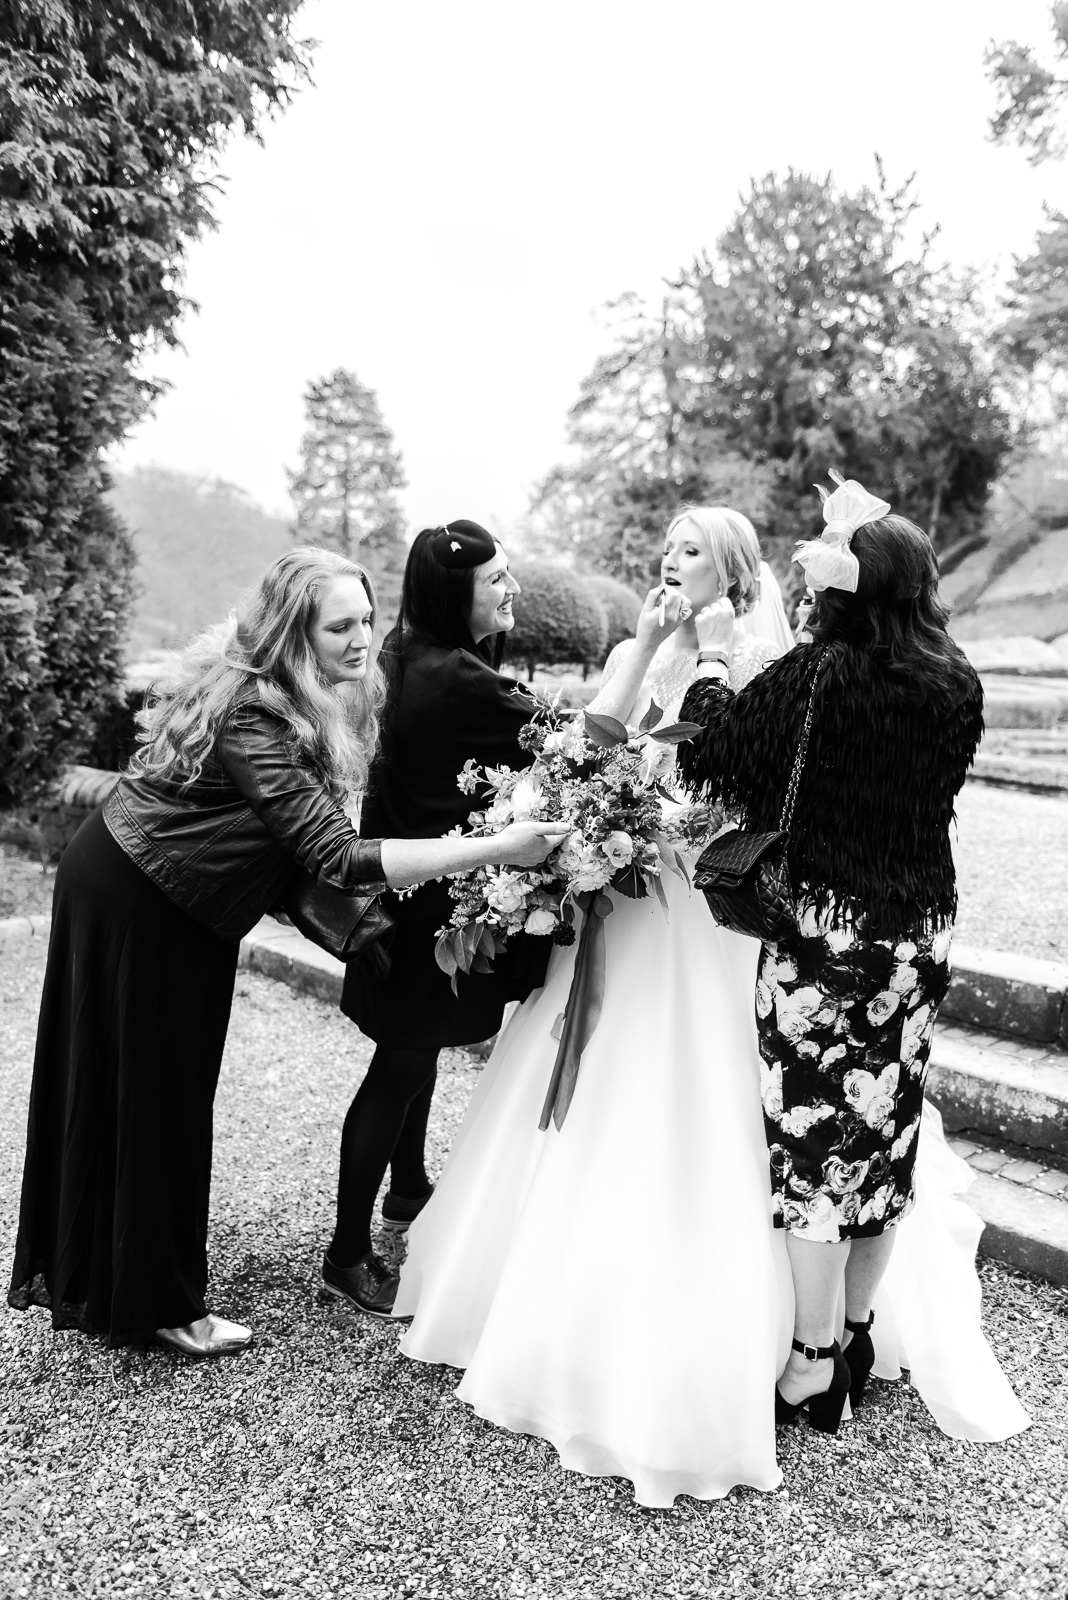 Black and white reportage wedding photo of bride